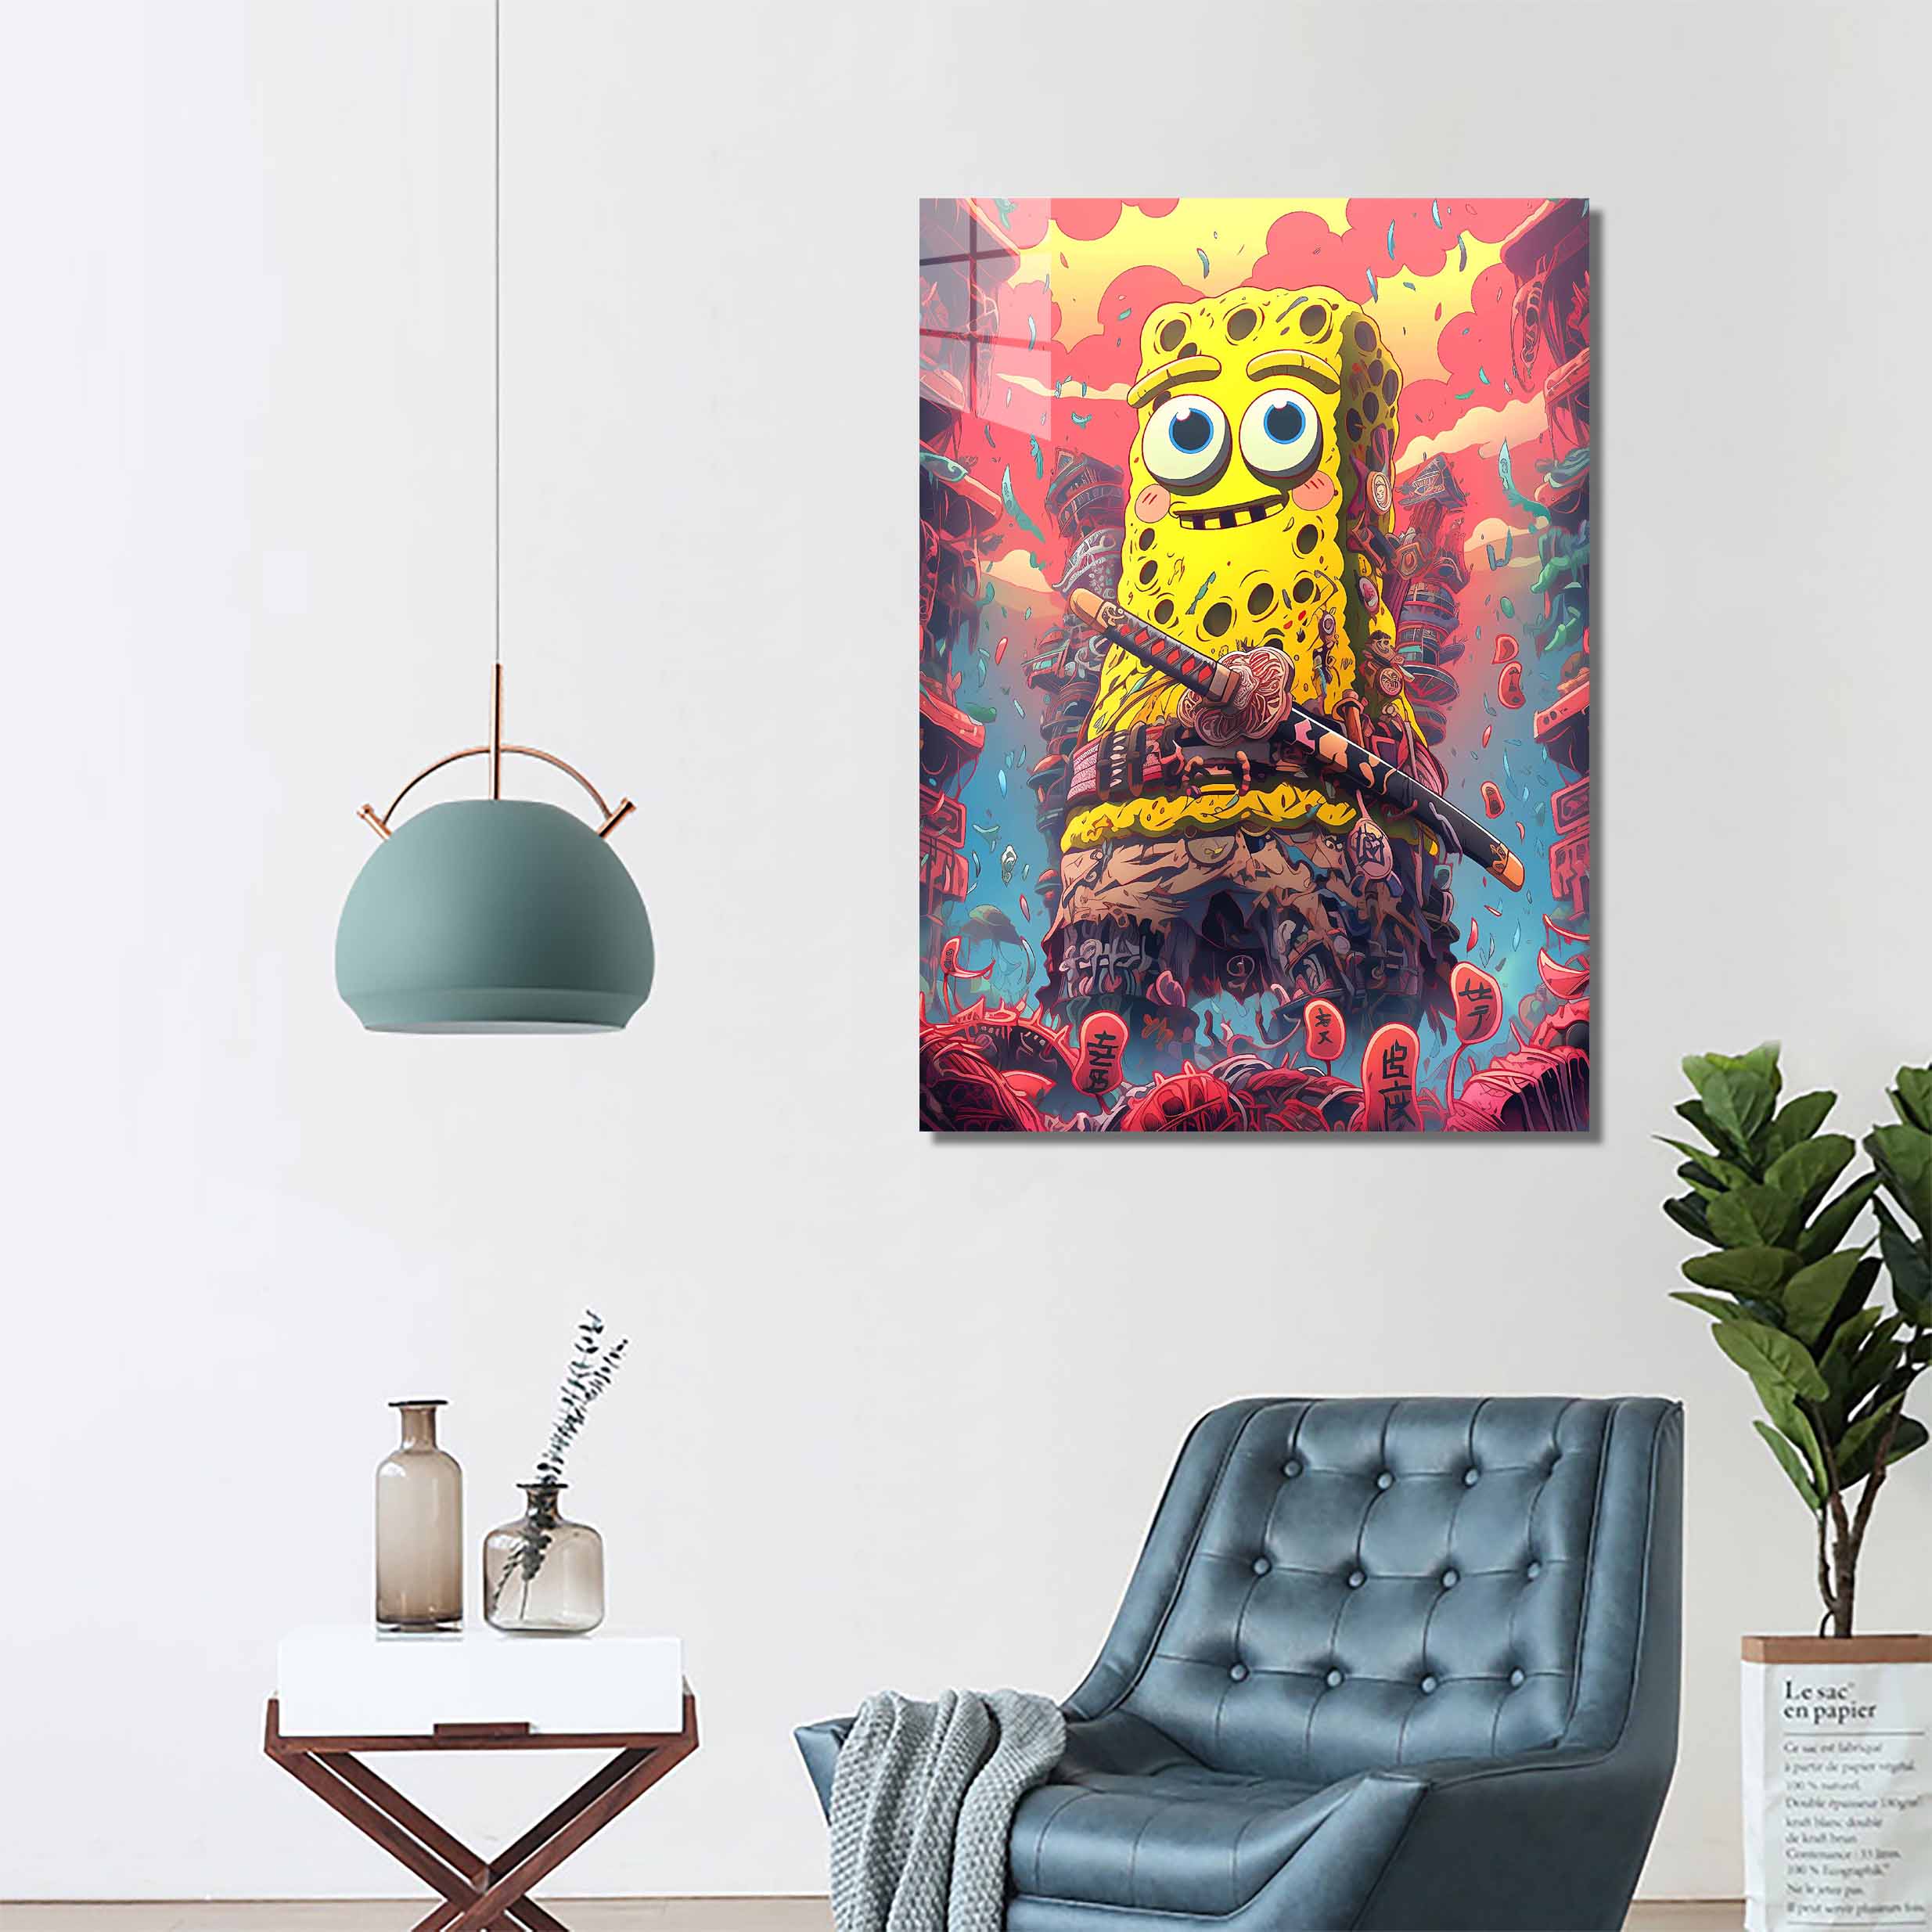 Spongebob-designed by @Minty Art